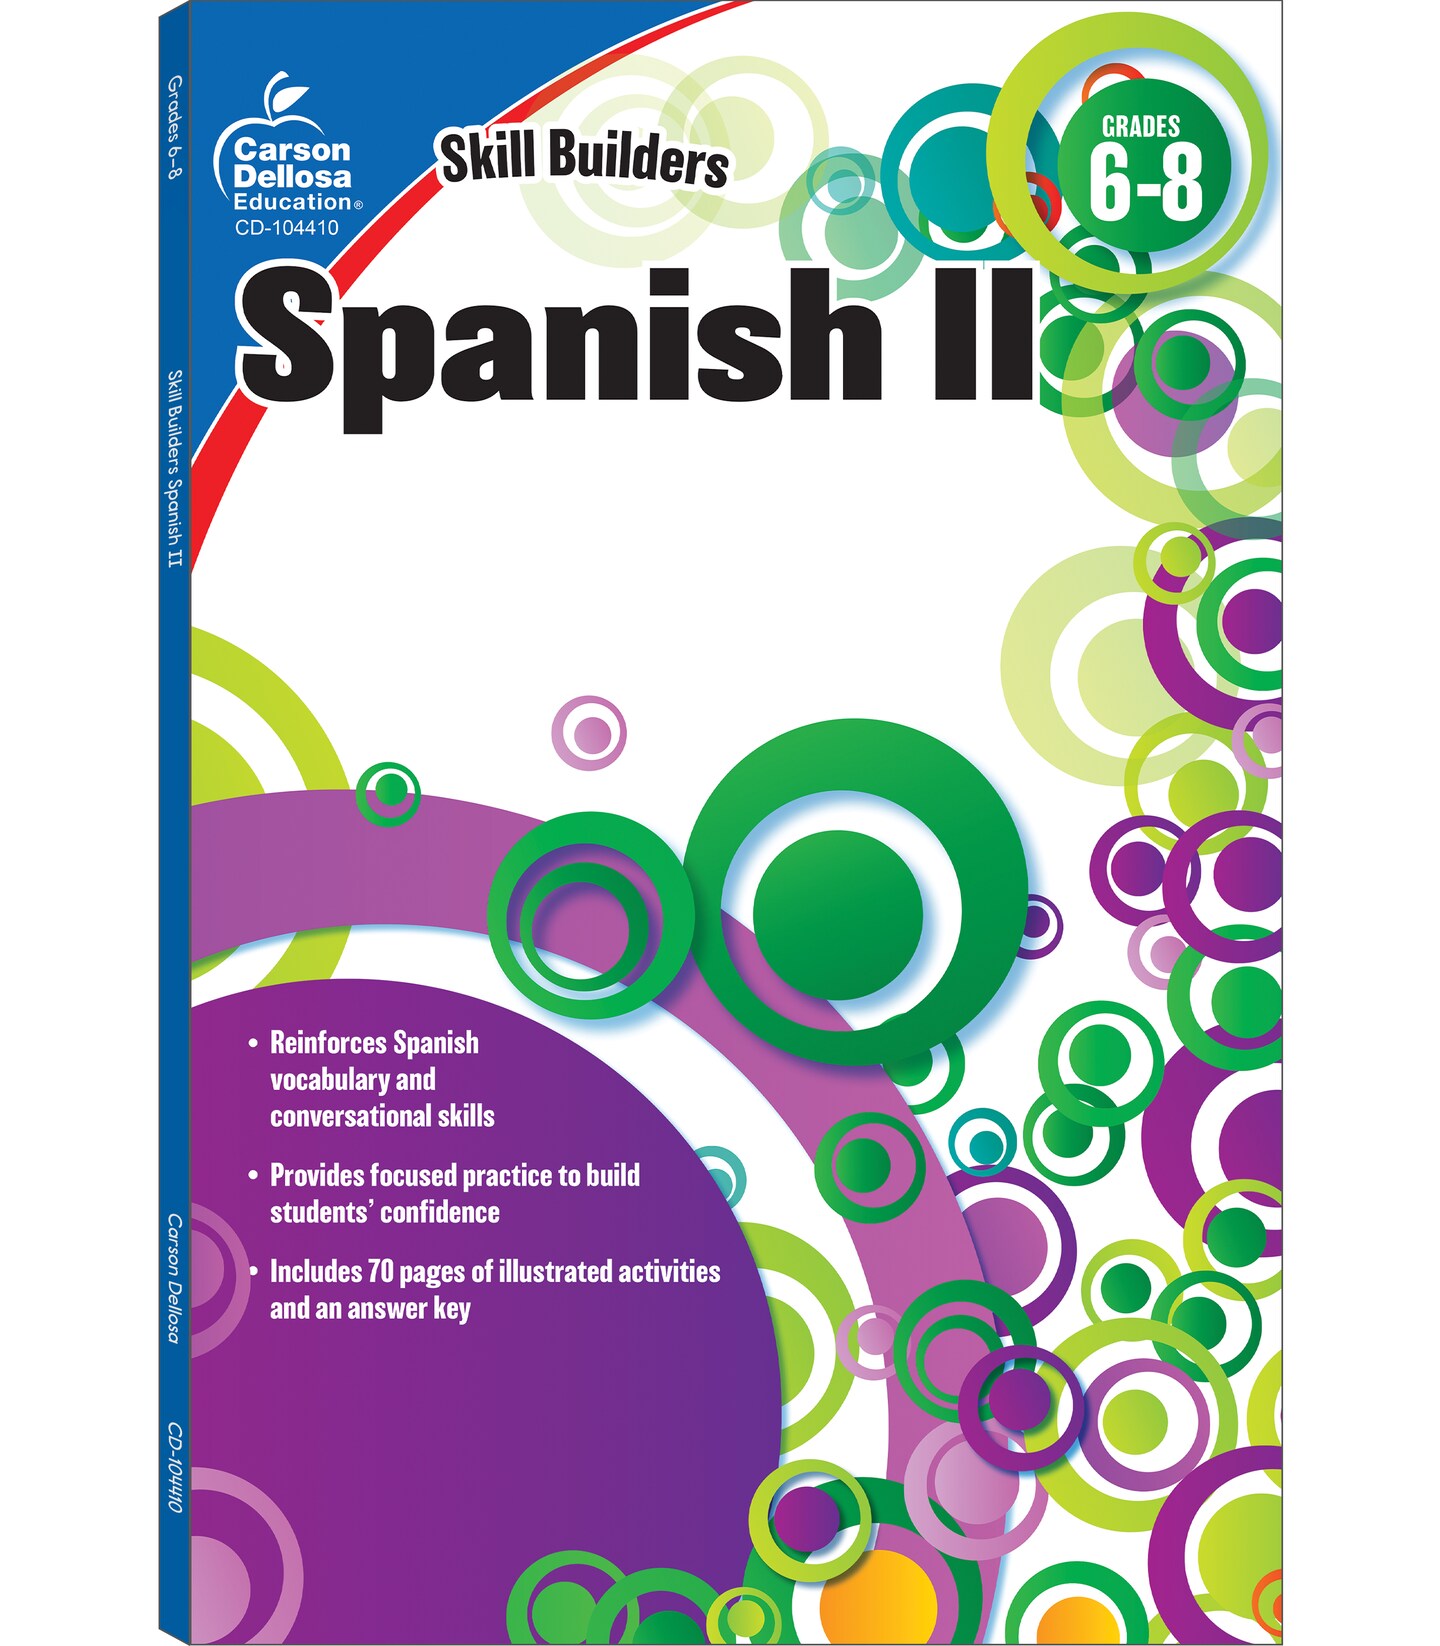 Carson Dellosa Skill Builders Level 2 Spanish Workbook for Kids Grades 6-8, Spanish Vocabulary Builder for Kids Ages 11-14, 6th&#x2013; 8th Grade Spanish Workbook, Learn Spanish Parts of Speech, Time &#x26; More